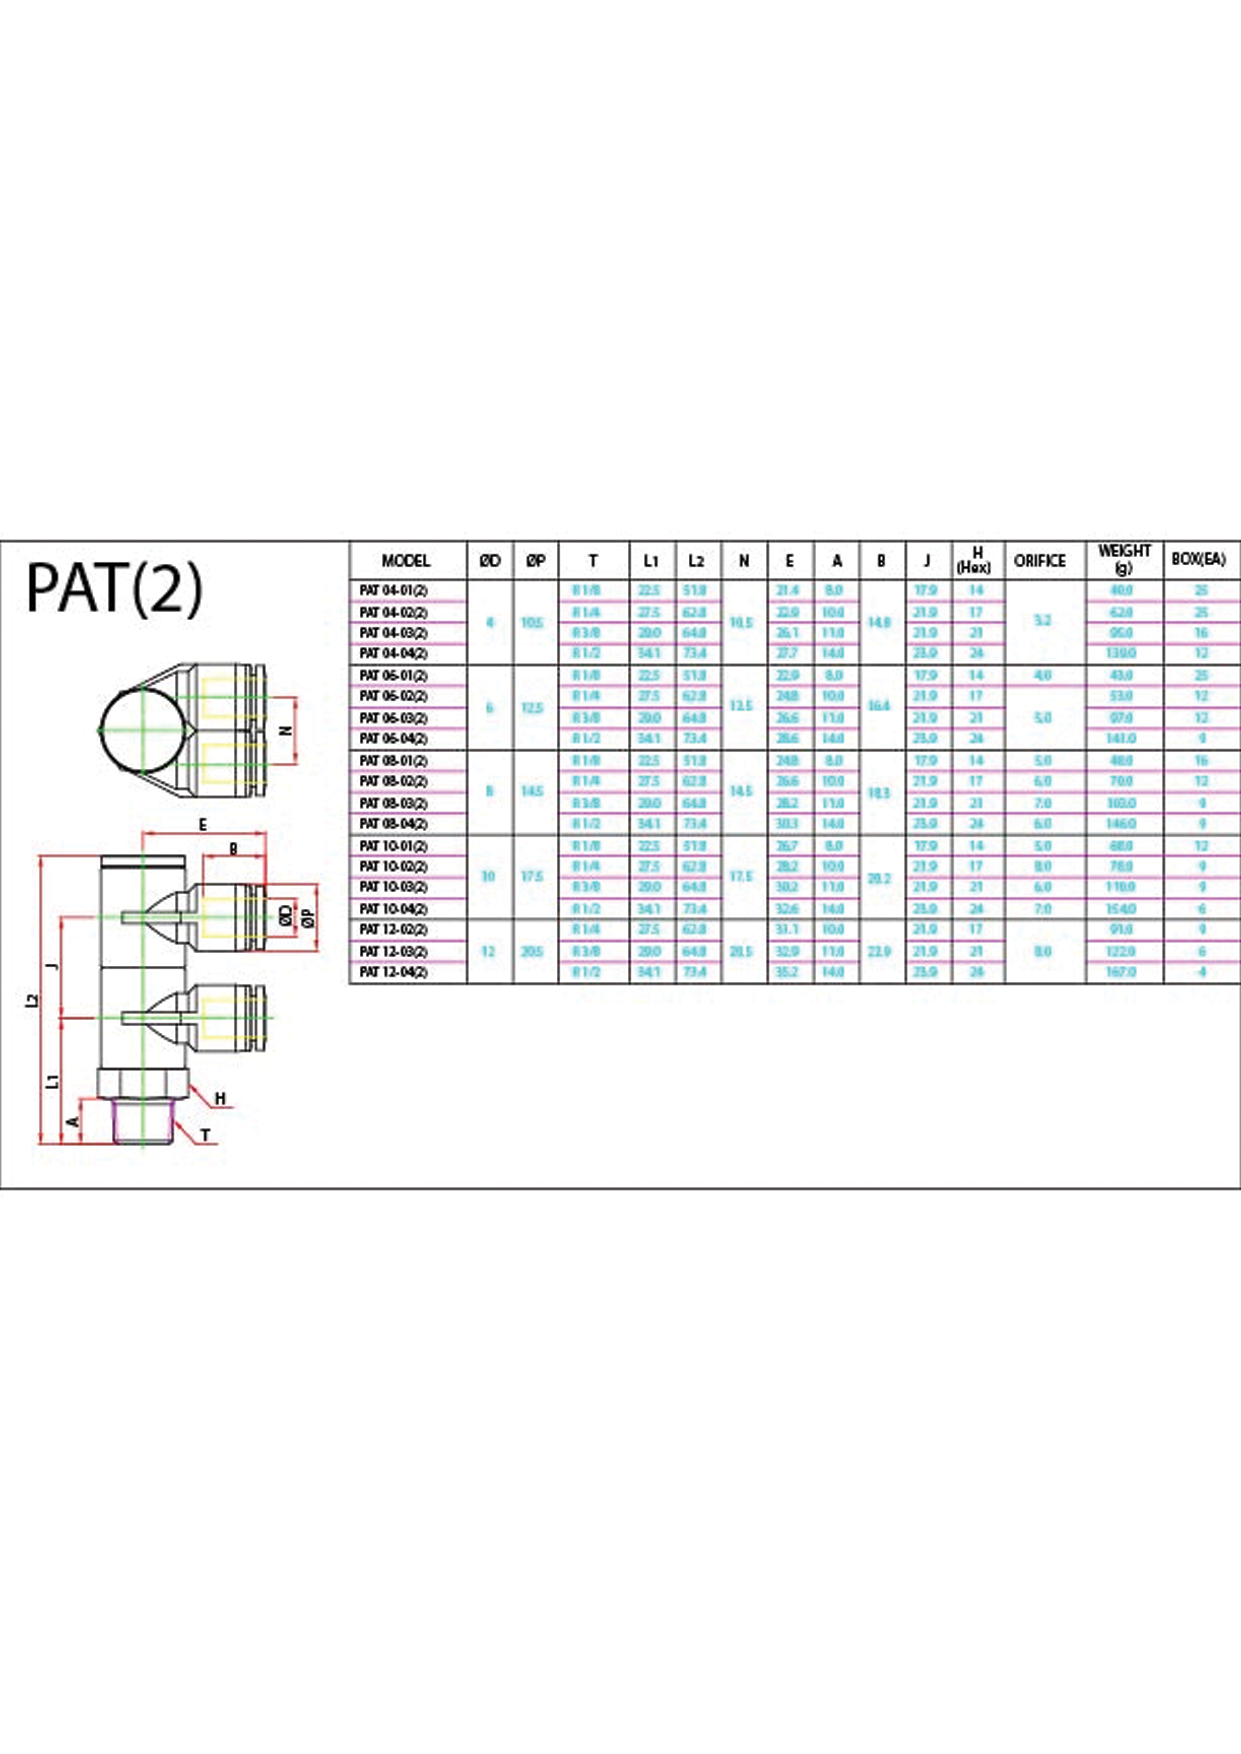 PAT(2) (Metric) Data Sheet ( 129 KB )